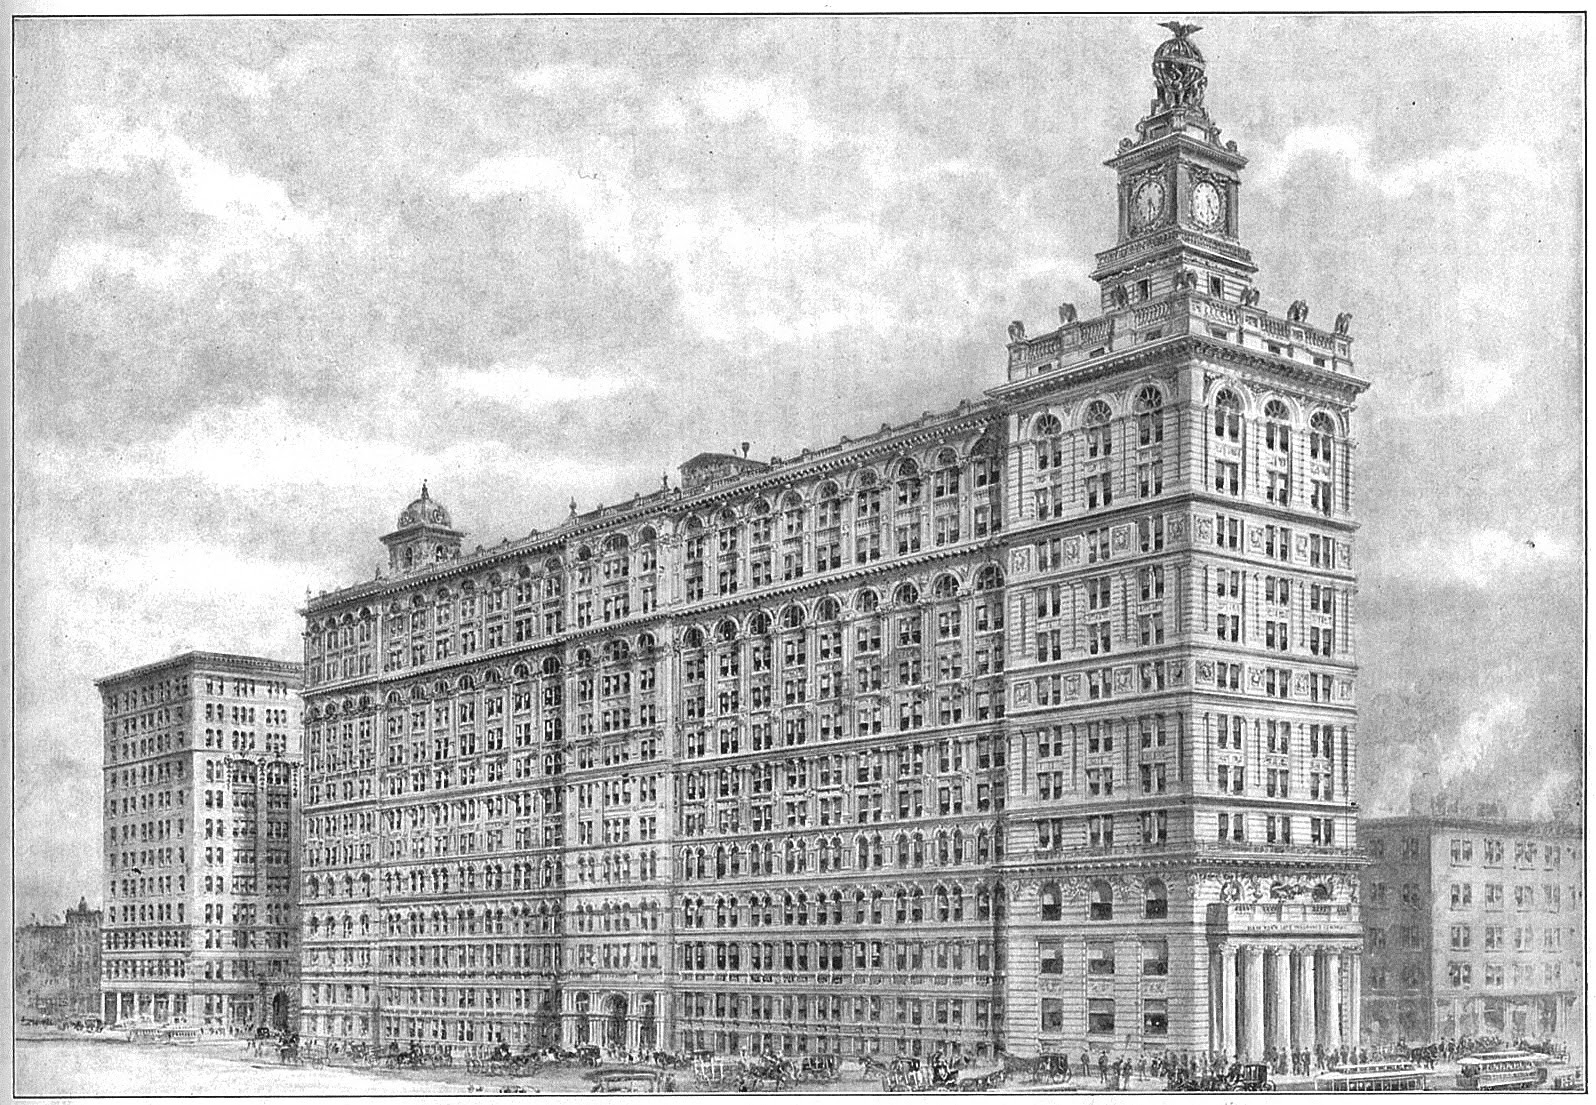 Daytonian in Manhattan: The 1884 Western Union Building - 186